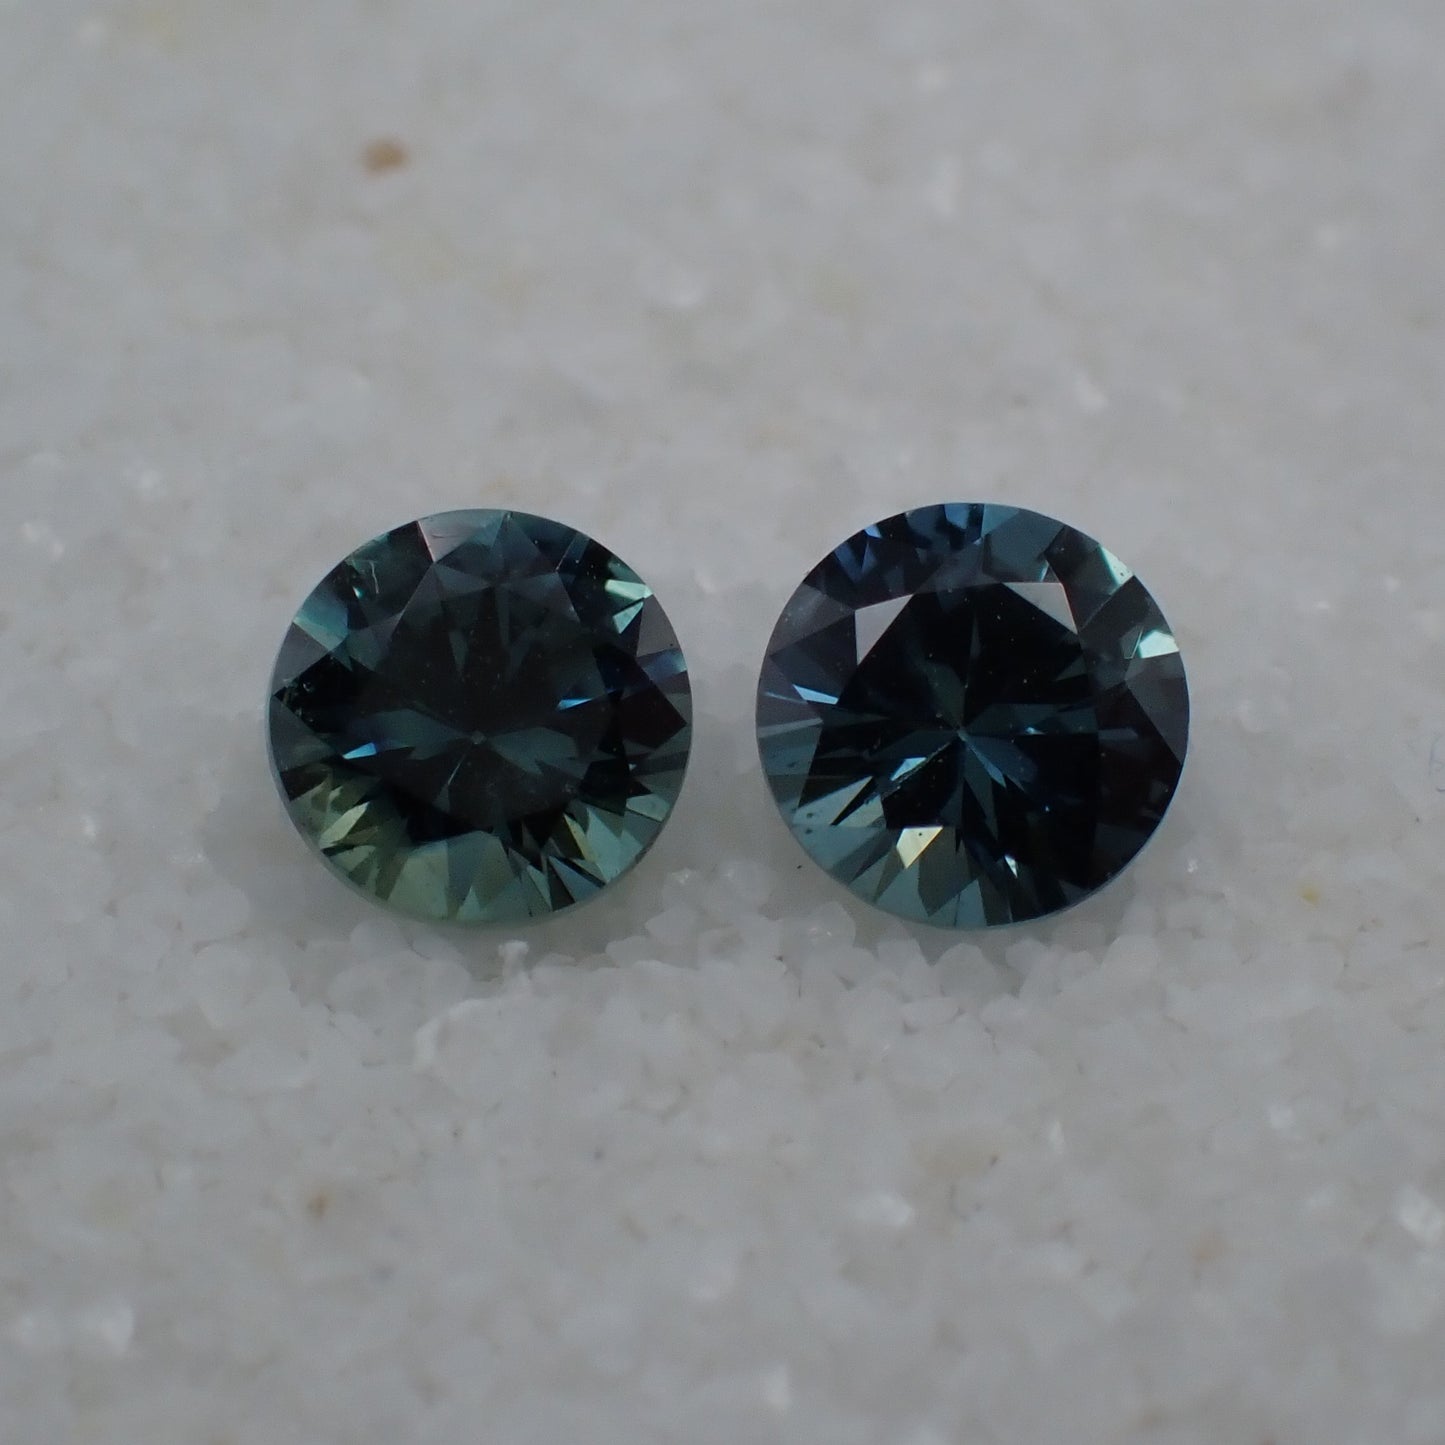 Australian Blue Sapphire Pair - Round Cut 0.38ct